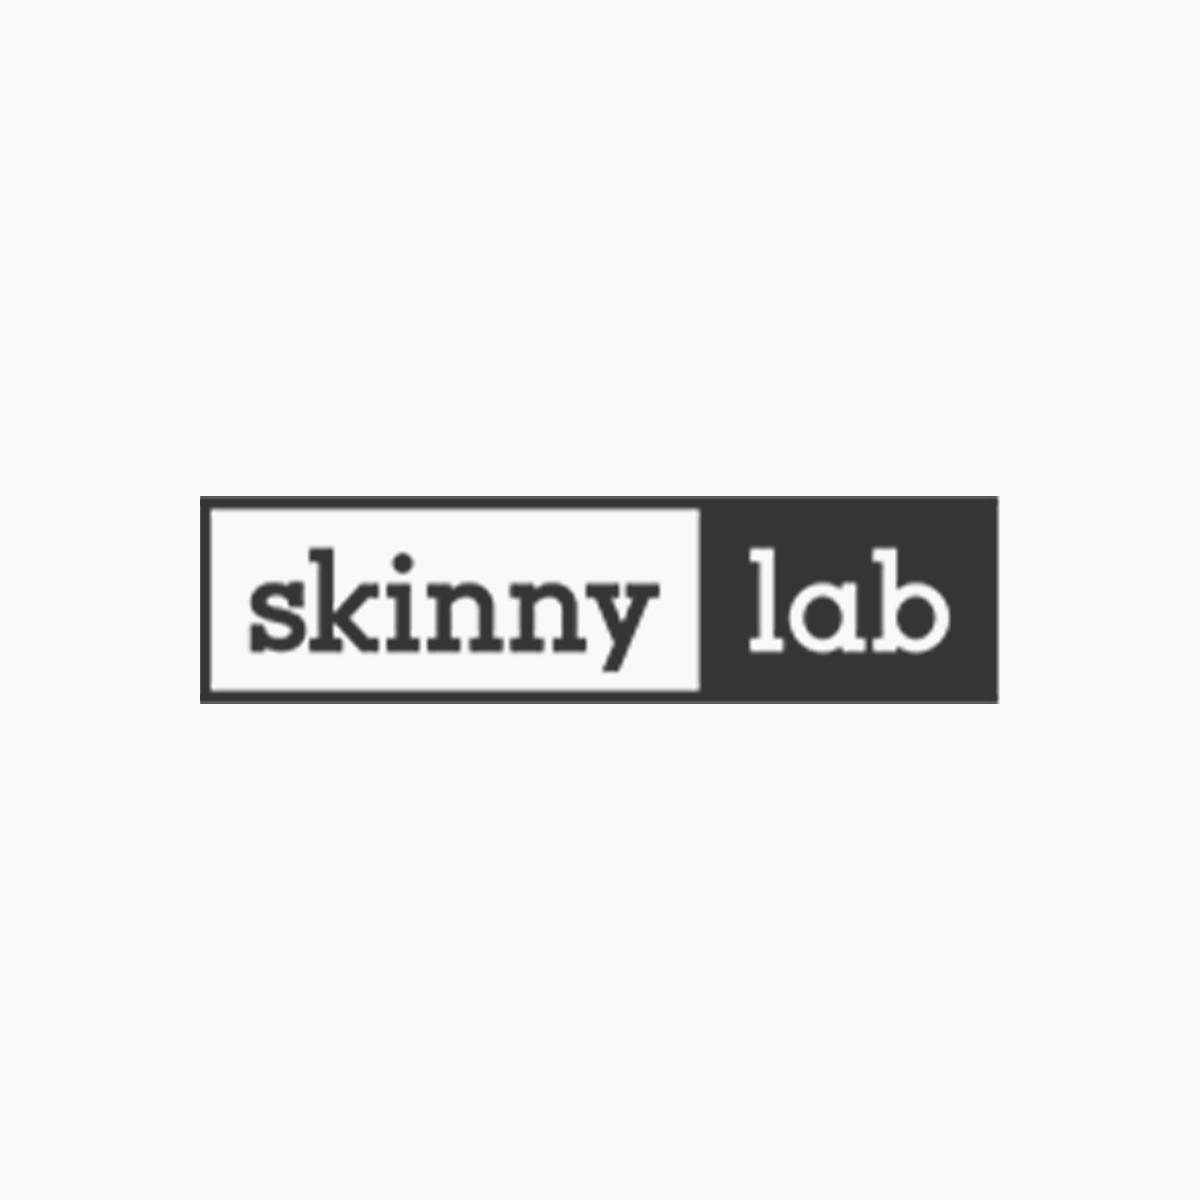 Skinny lab